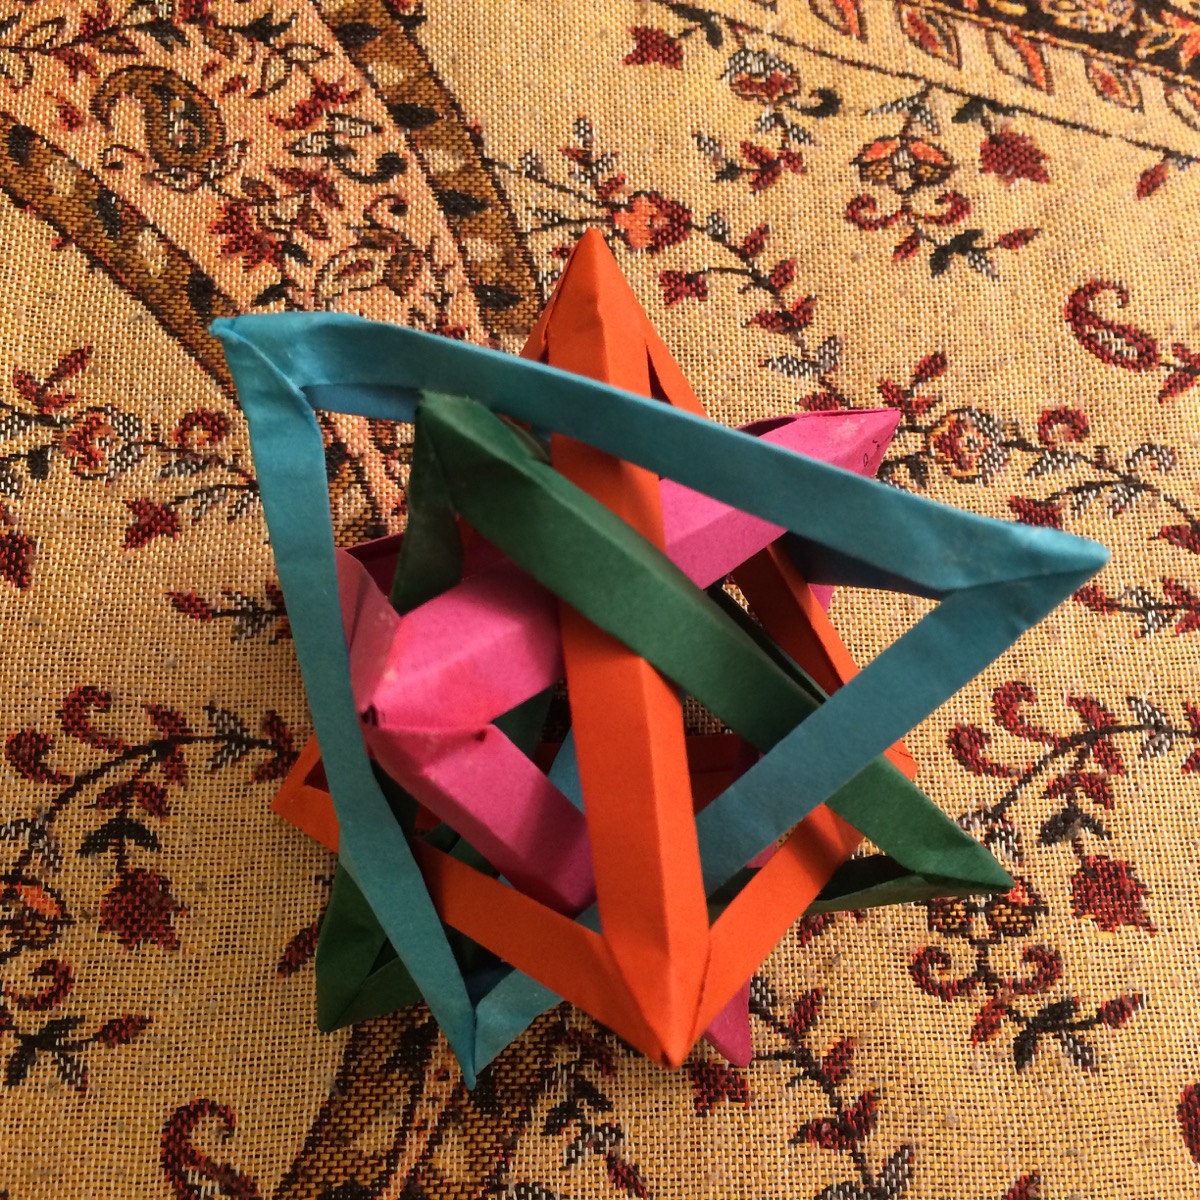 tetrahedron_3